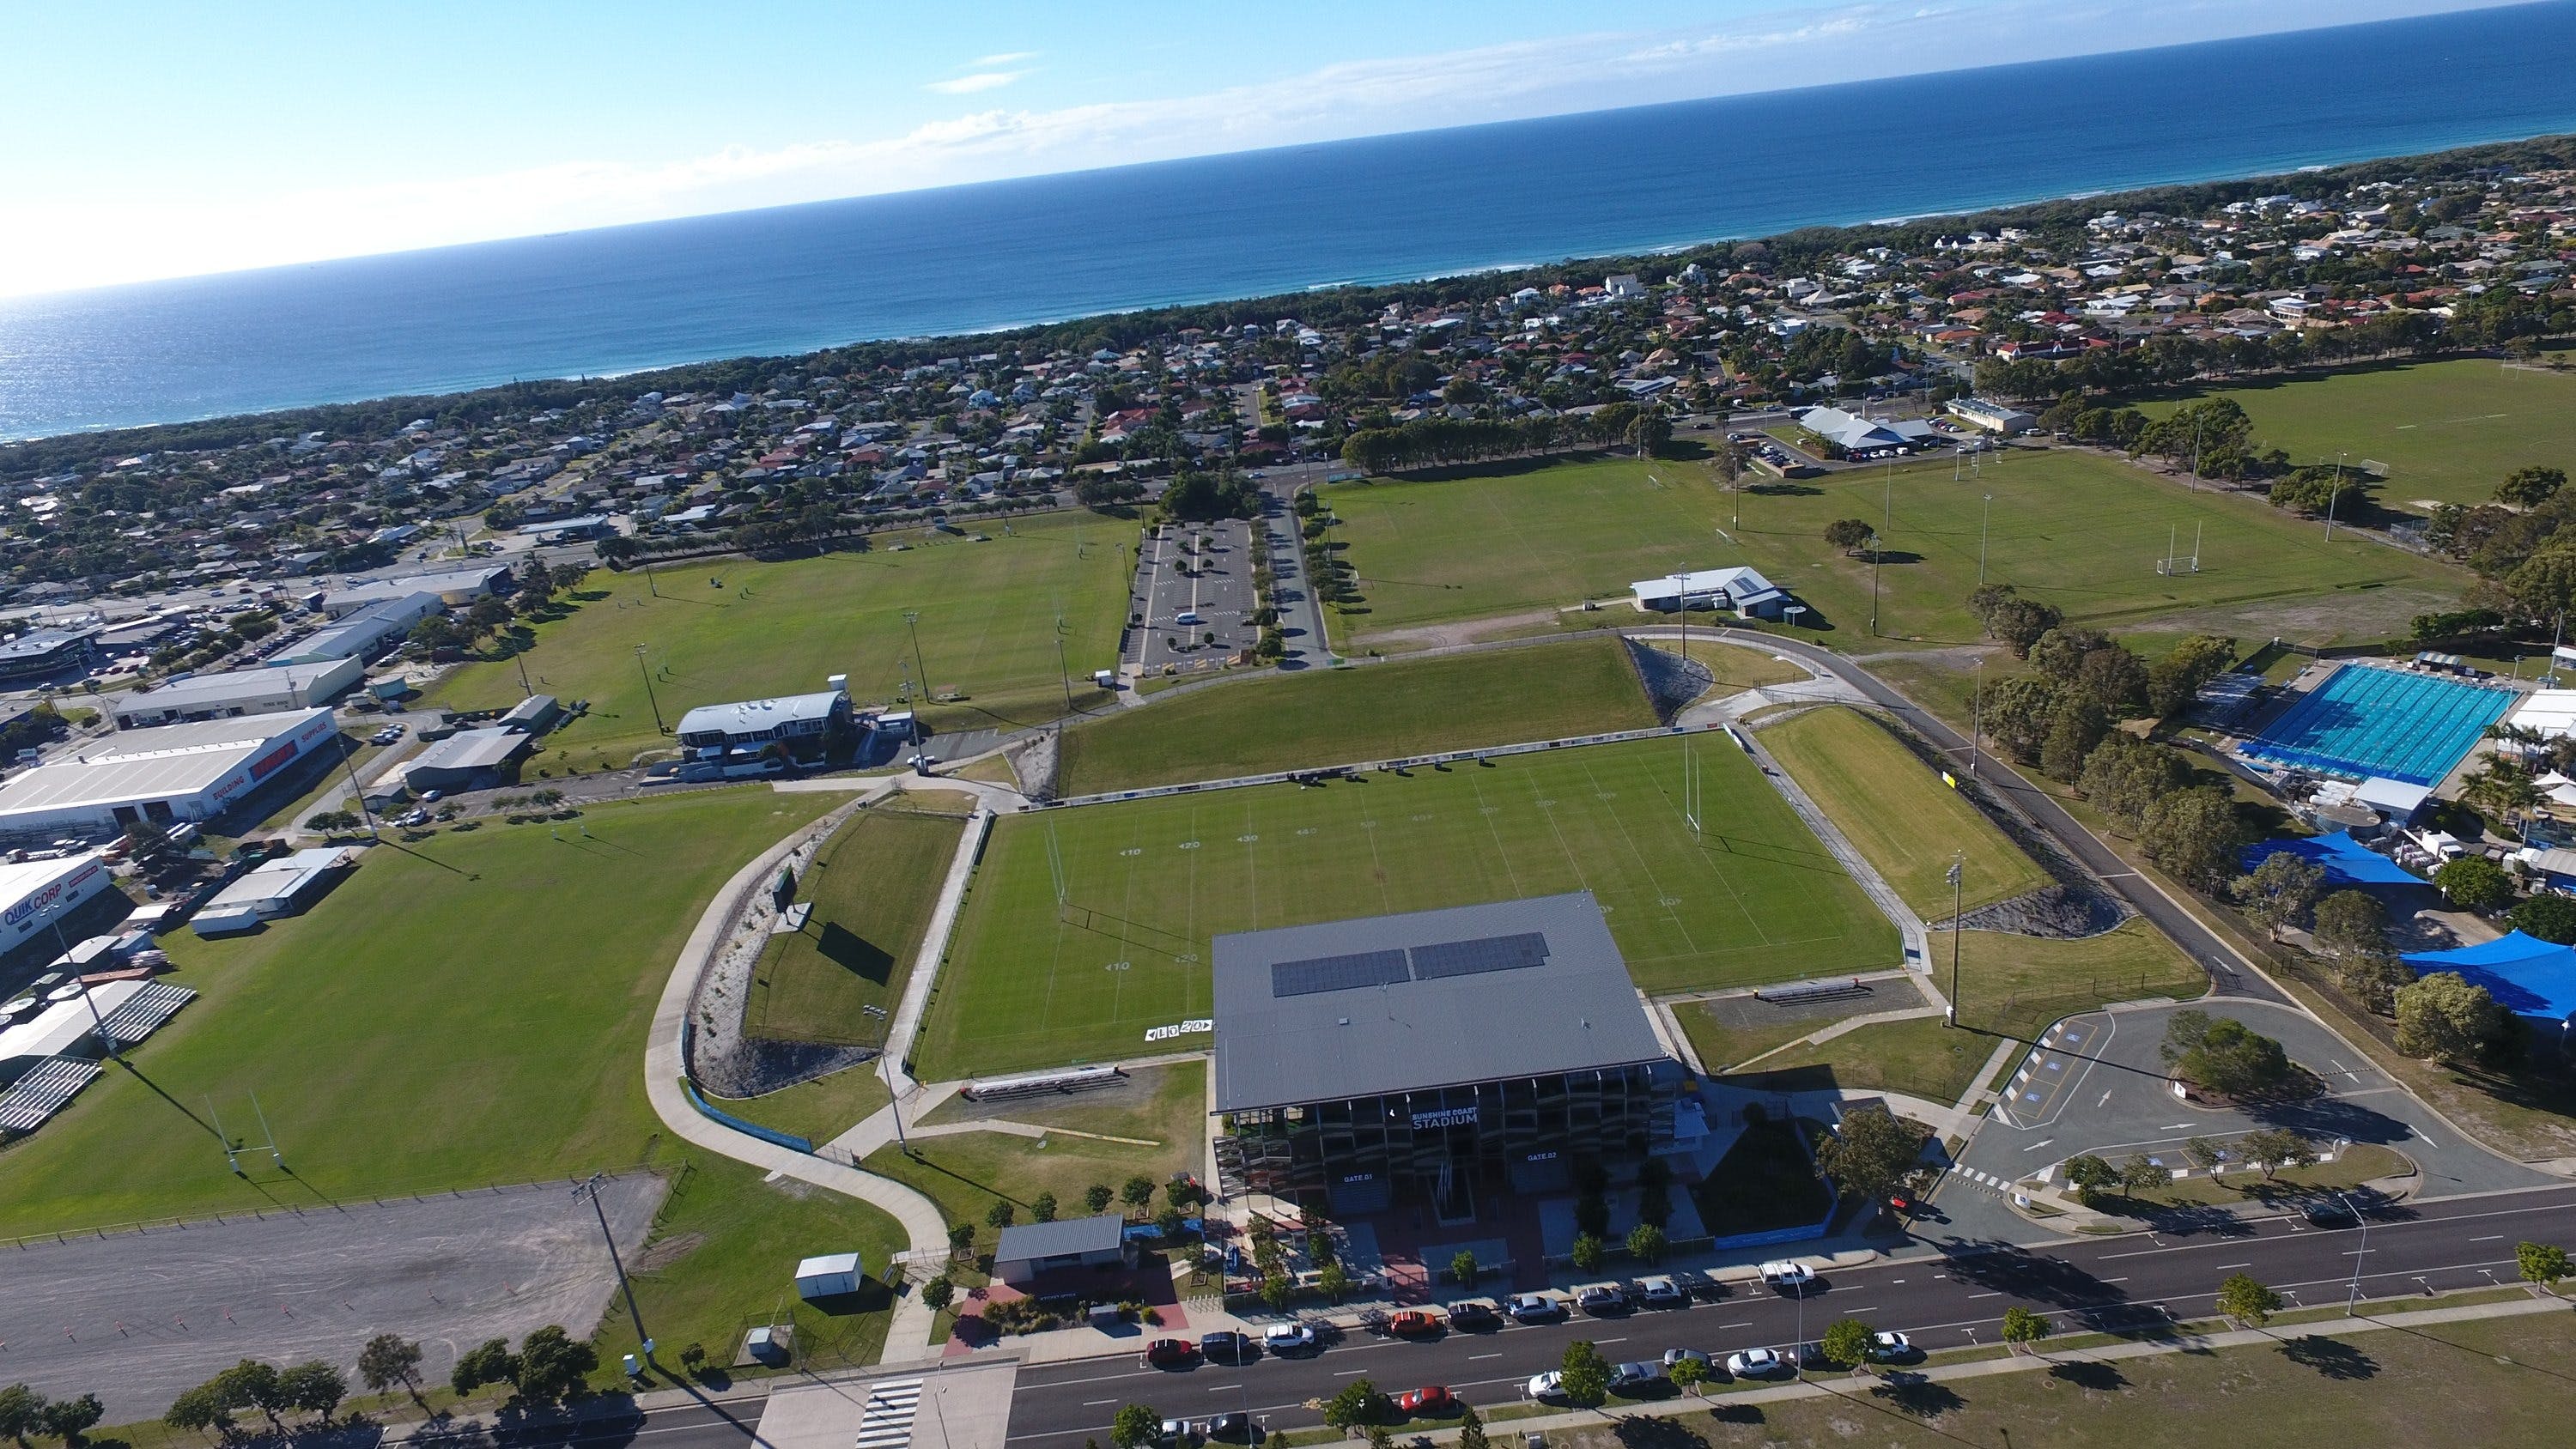 Sunshine Coast Stadium - Find Attractions